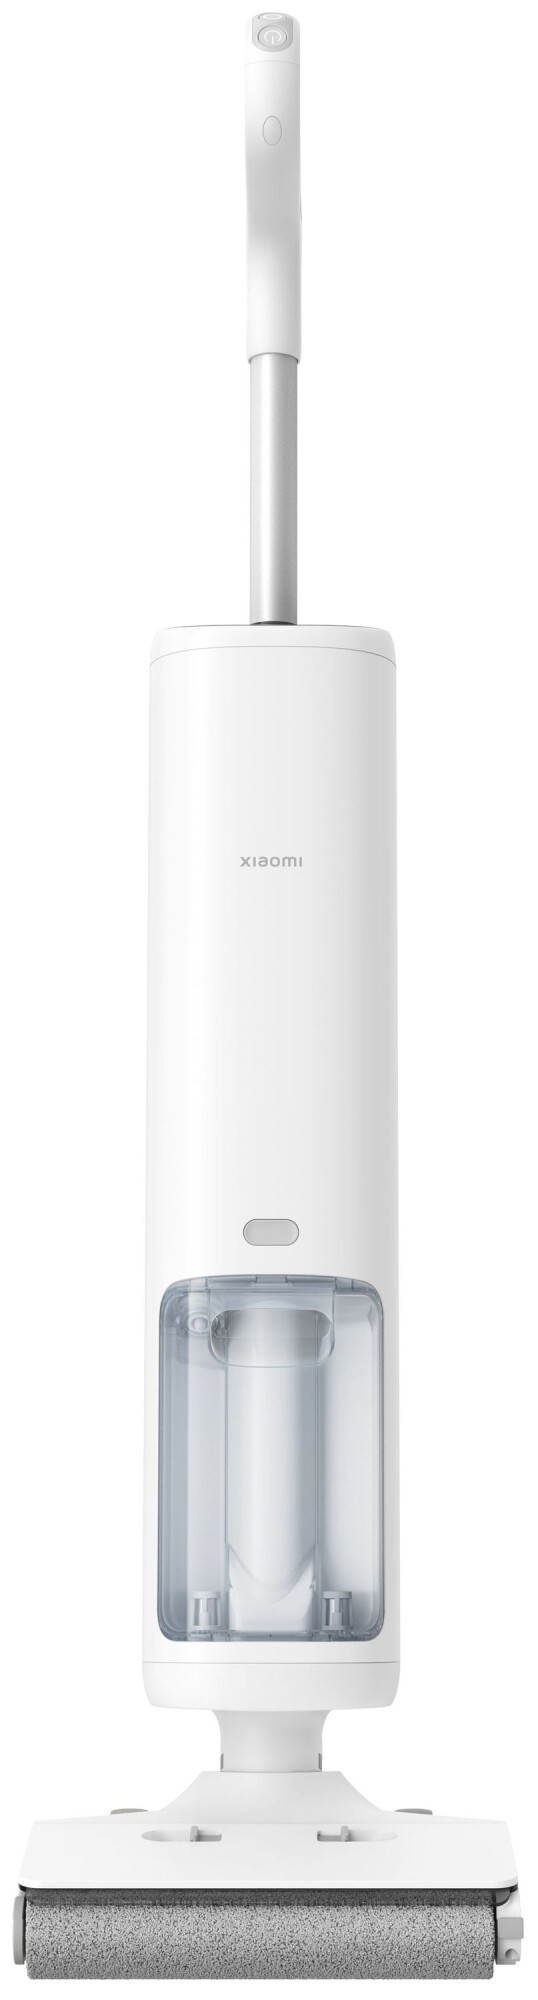 Пылесос Xiaomi Truclean W10 Pro Wet Dry Vacuum EU